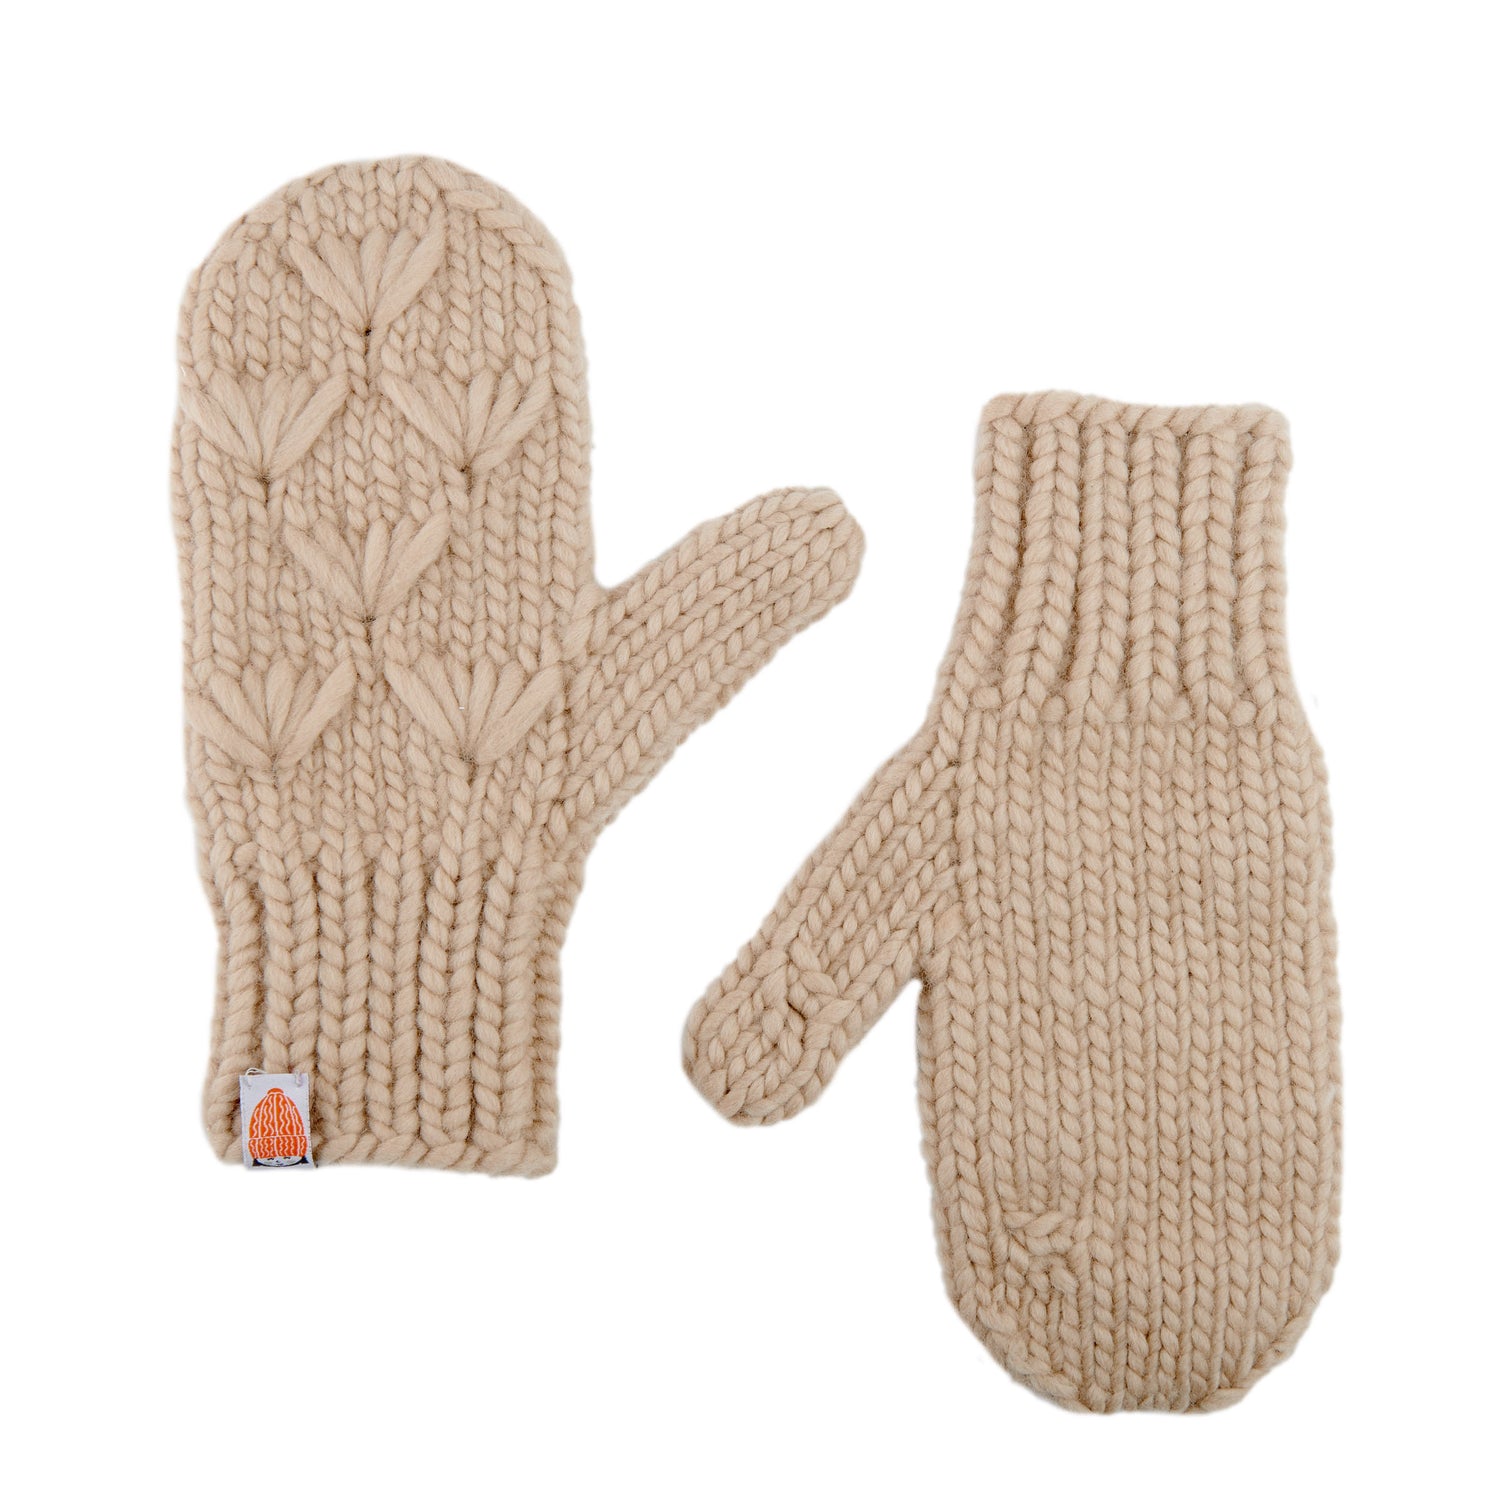 Knit Fingerless Mittens, Superfine Italian Merino Wool, Small